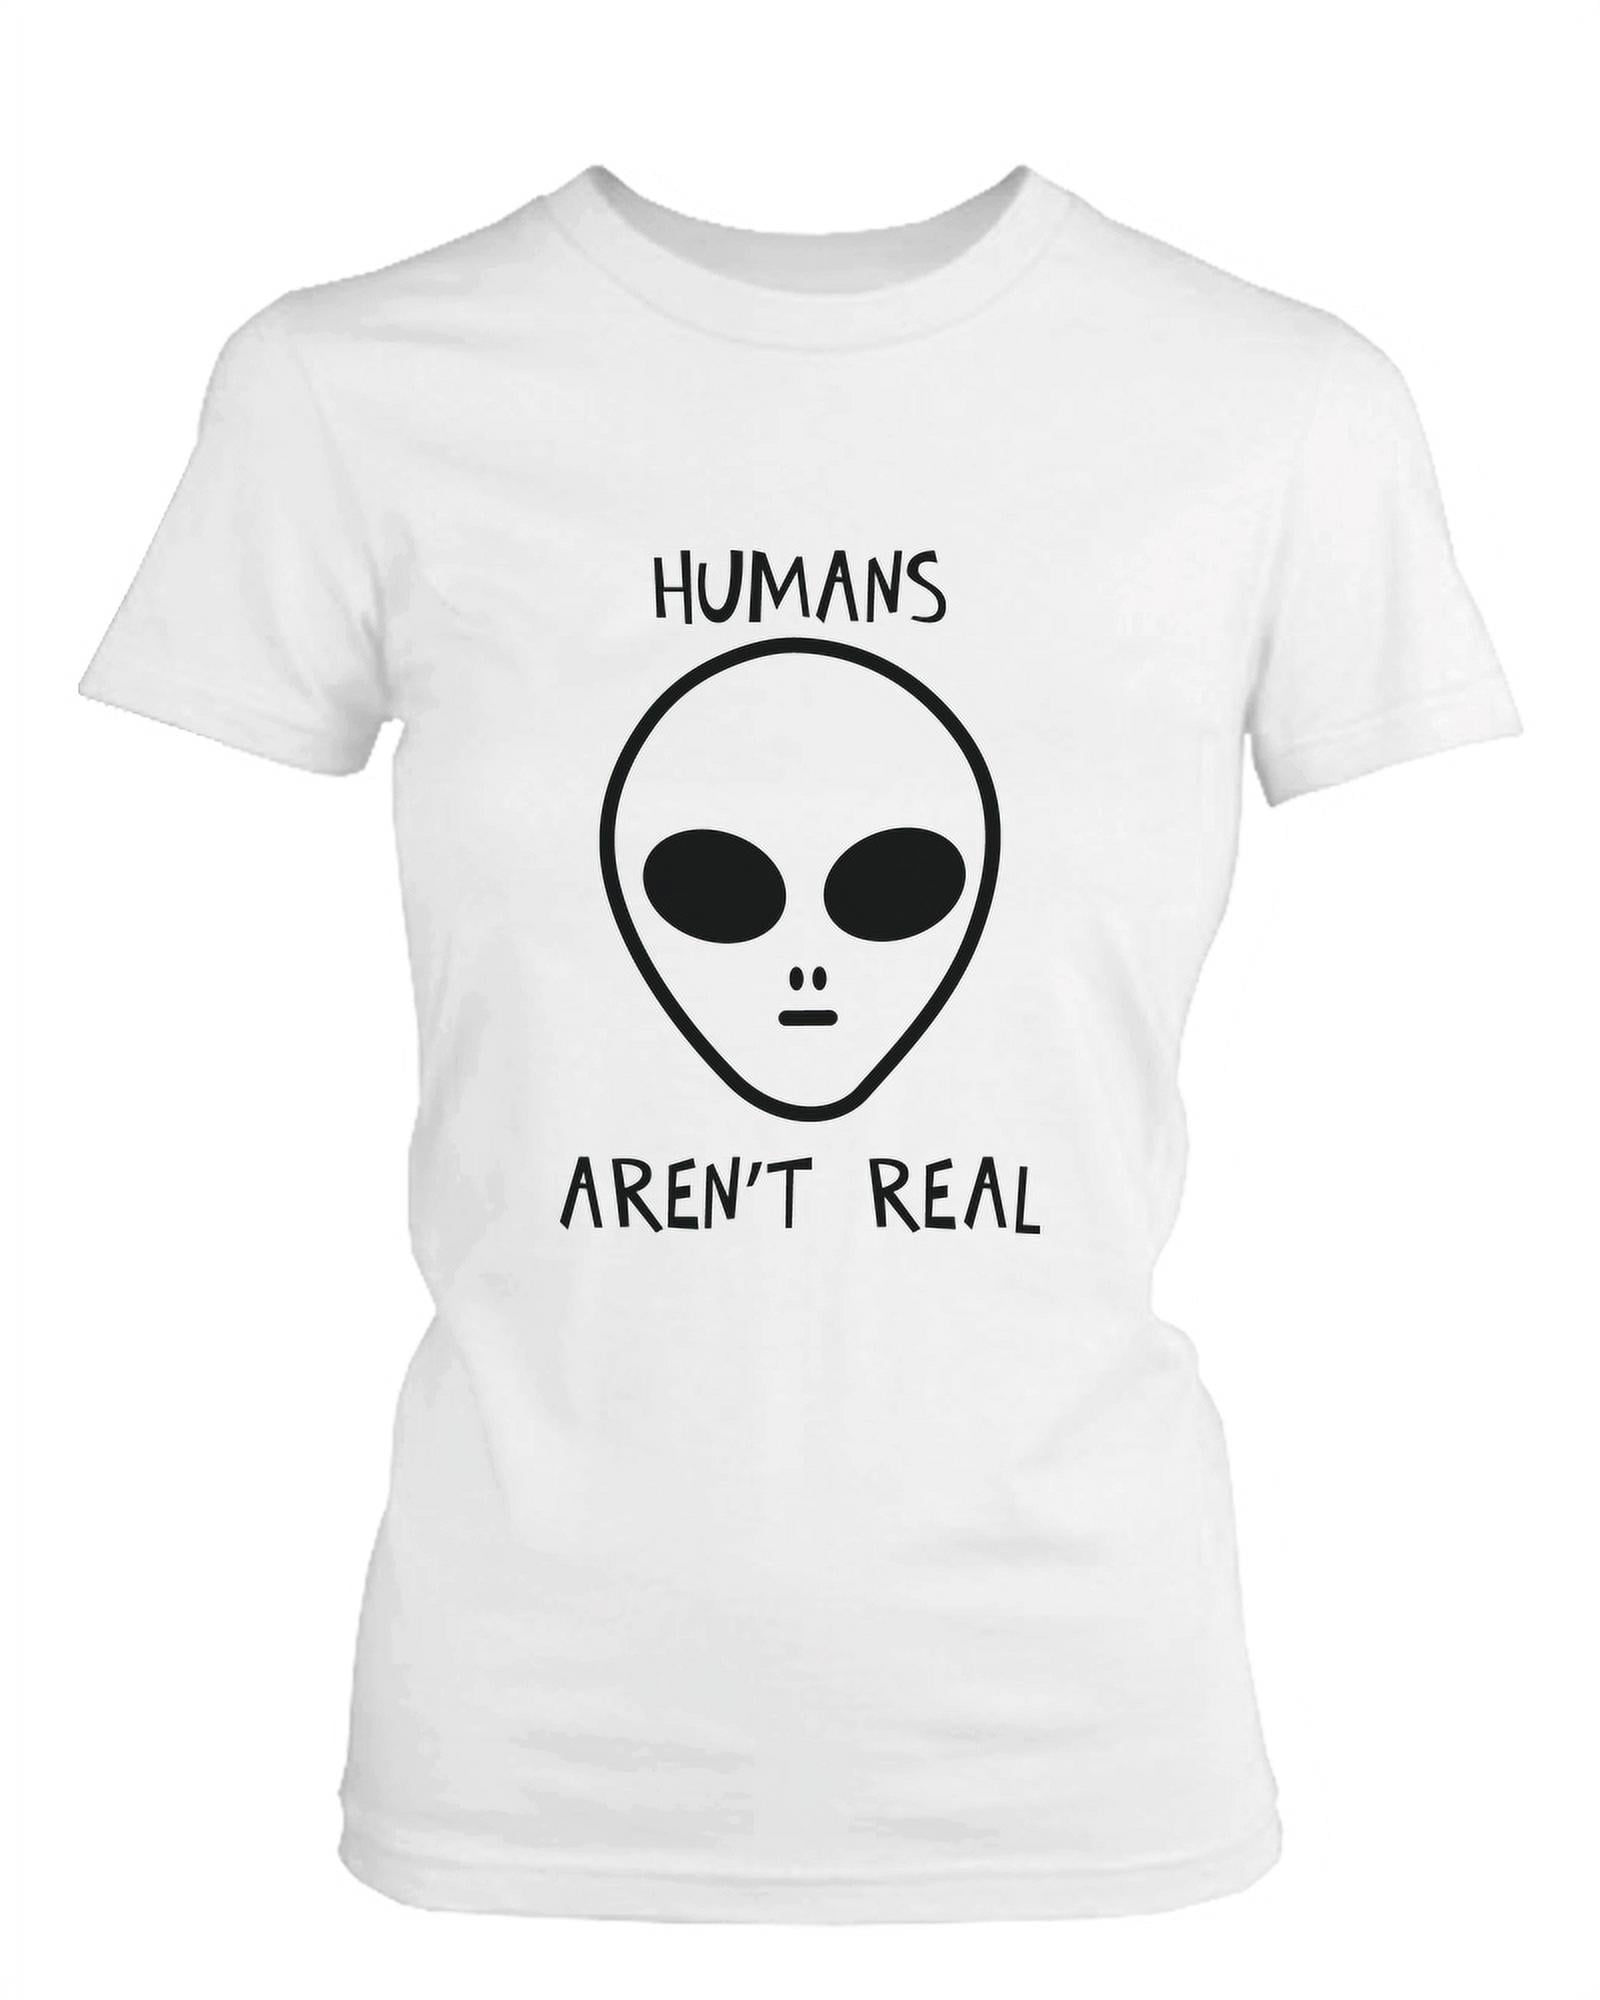 Humans Aren't Real Alien Women's Funny T Shirt Humorous Tee Cute Graphic Tshirt  Funny Shirt Women-SMALL 